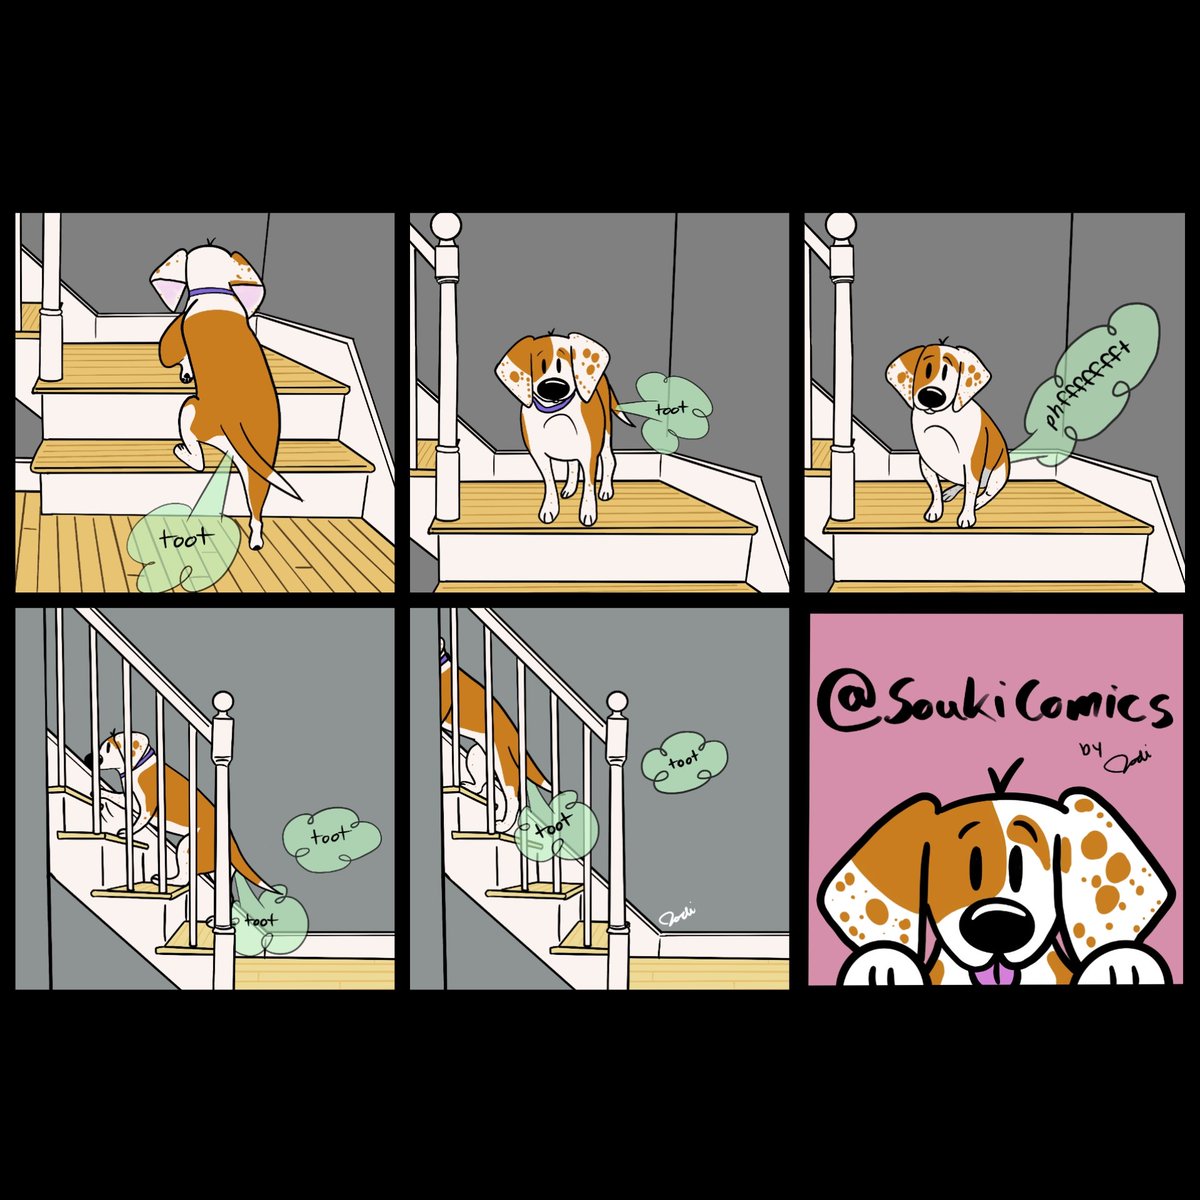 'Stair Toots' 💨
#comics #dogcomics #cutecomics #dogfarts #fartjokes #webcomics #dogmom #dogdad #beaglemix #toots #digitalart